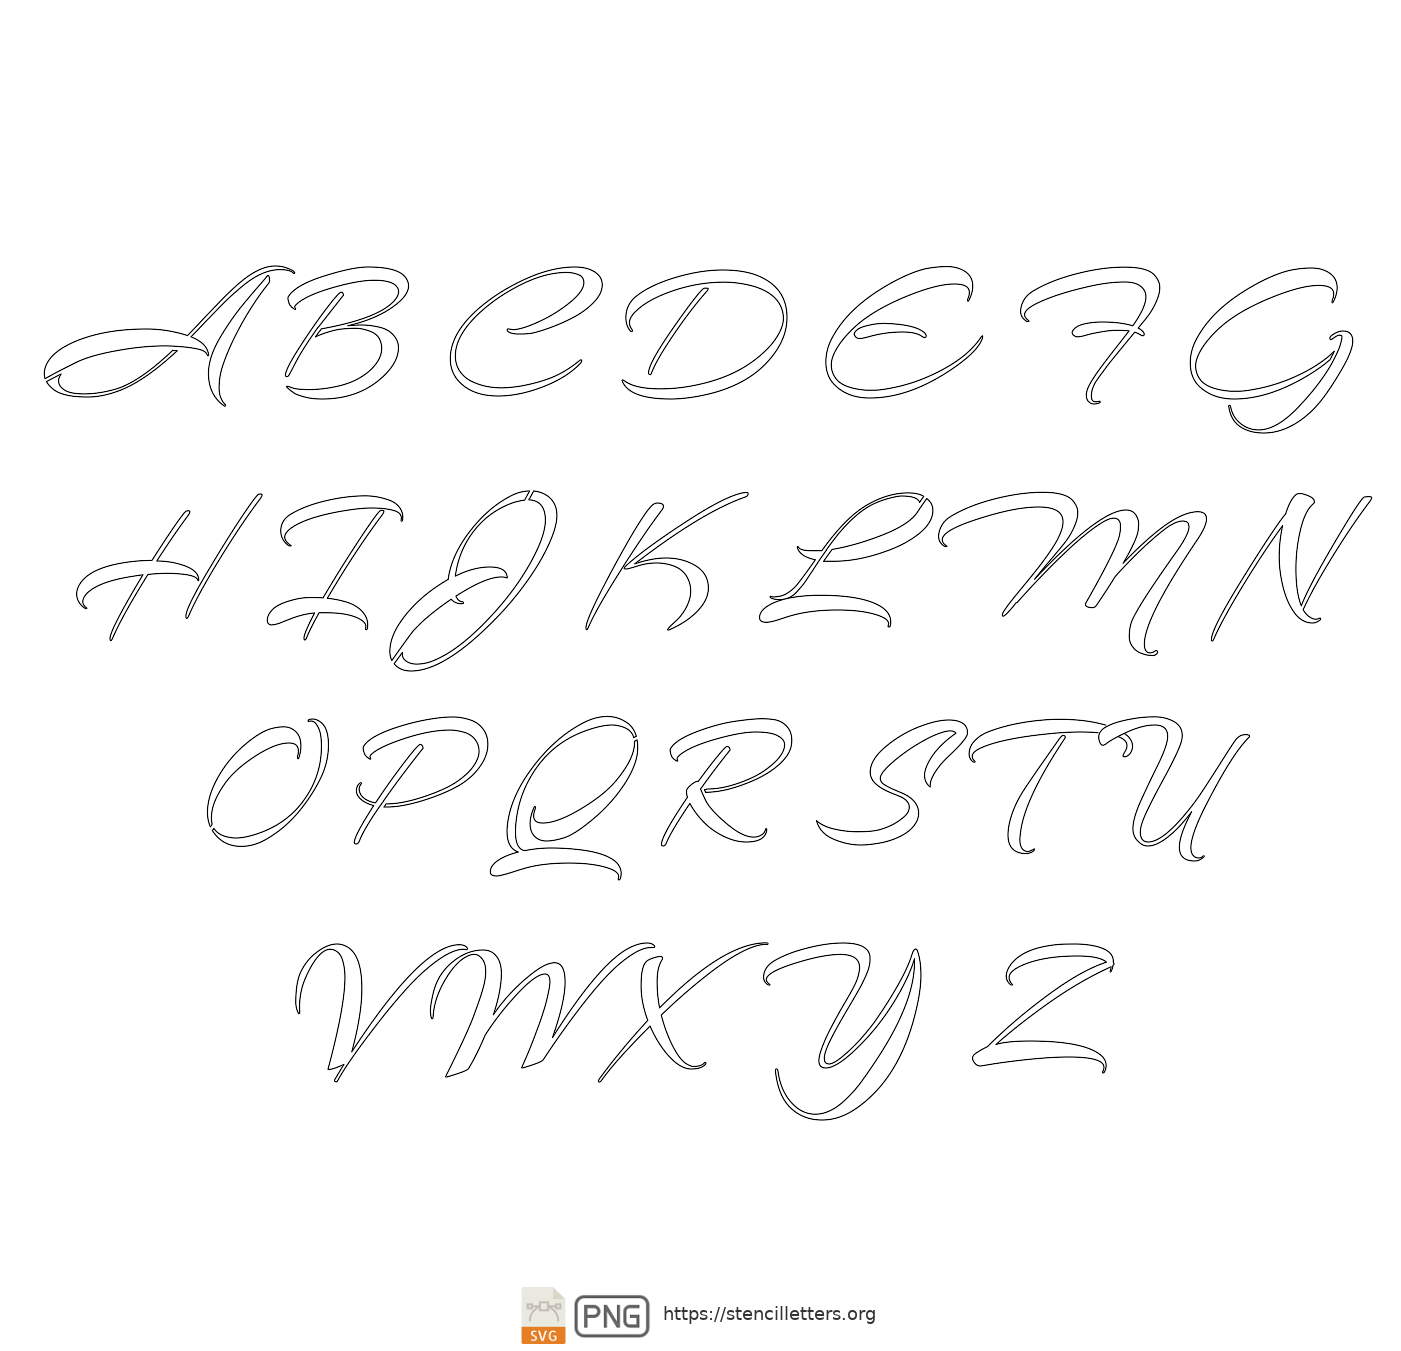 Brushed Painter’s Cursive uppercase letter stencils